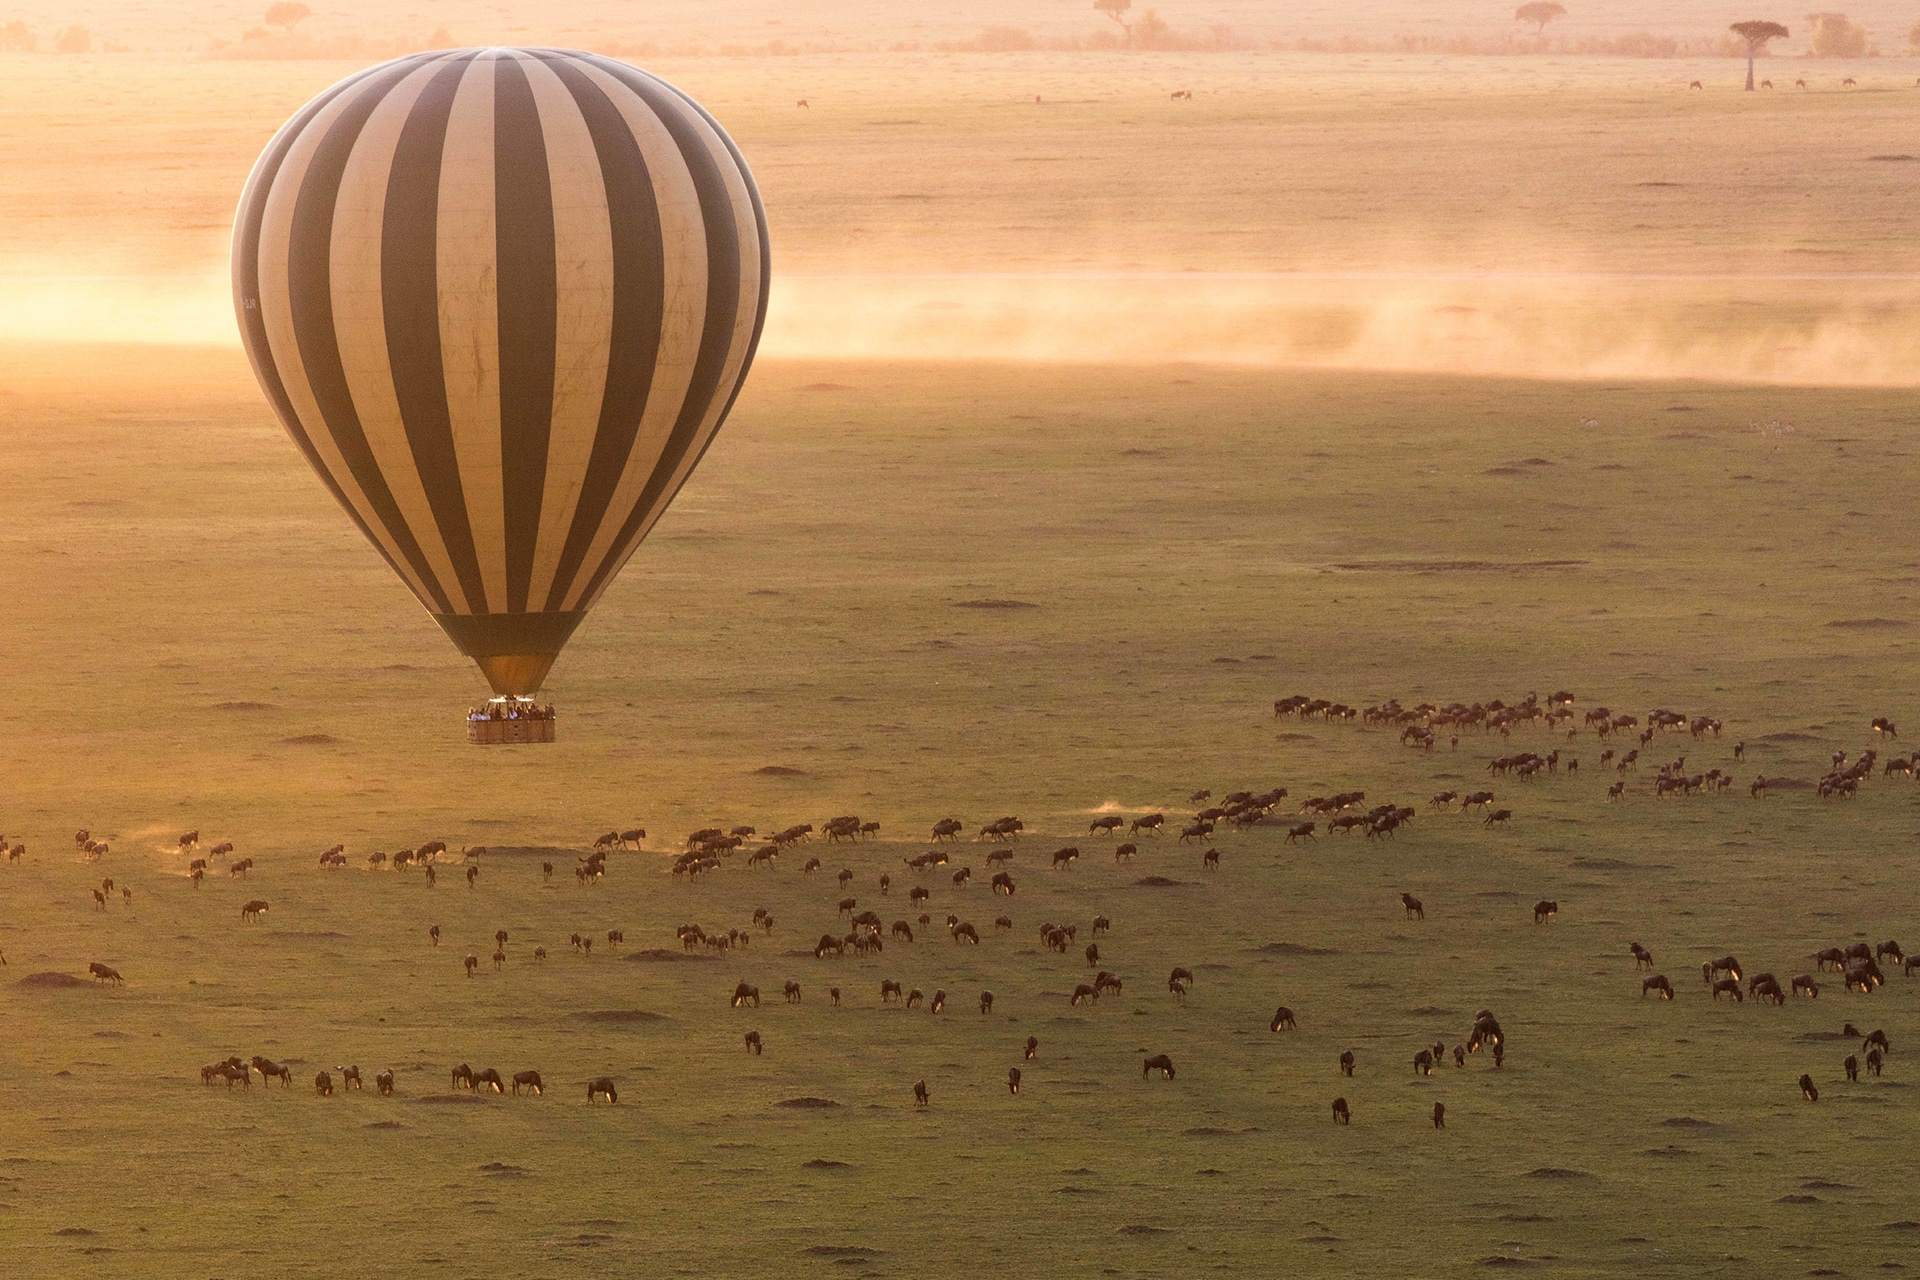 Sunrise hot air ballooning, a must for any luxury safari honeymoon